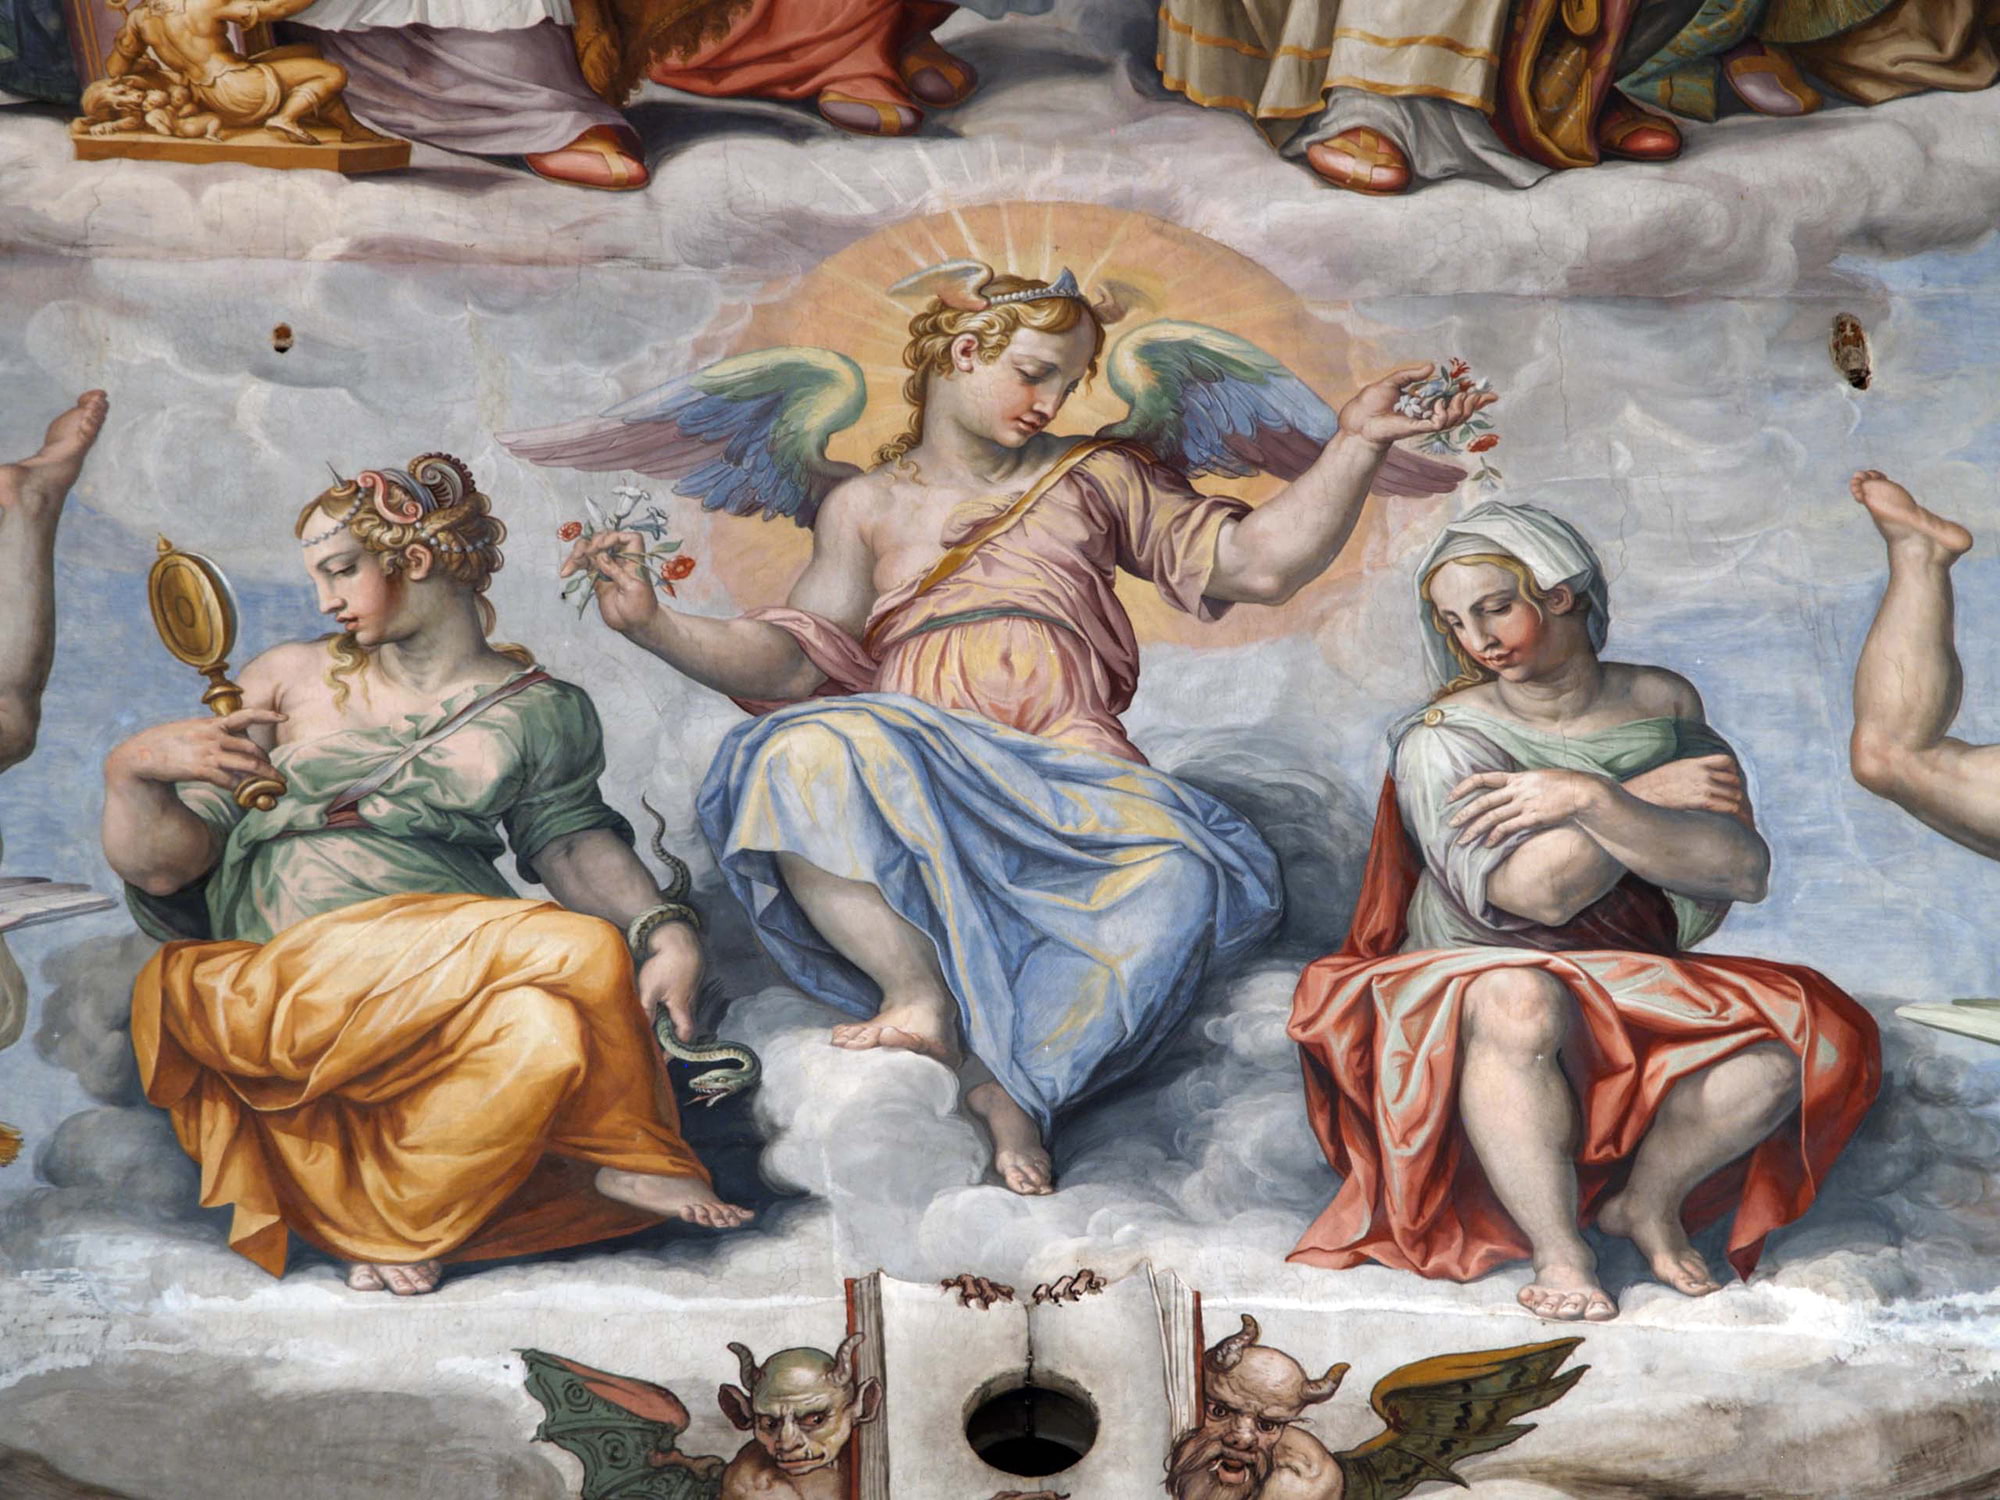 Interno della Cupola di Brunelleschi, affreschi